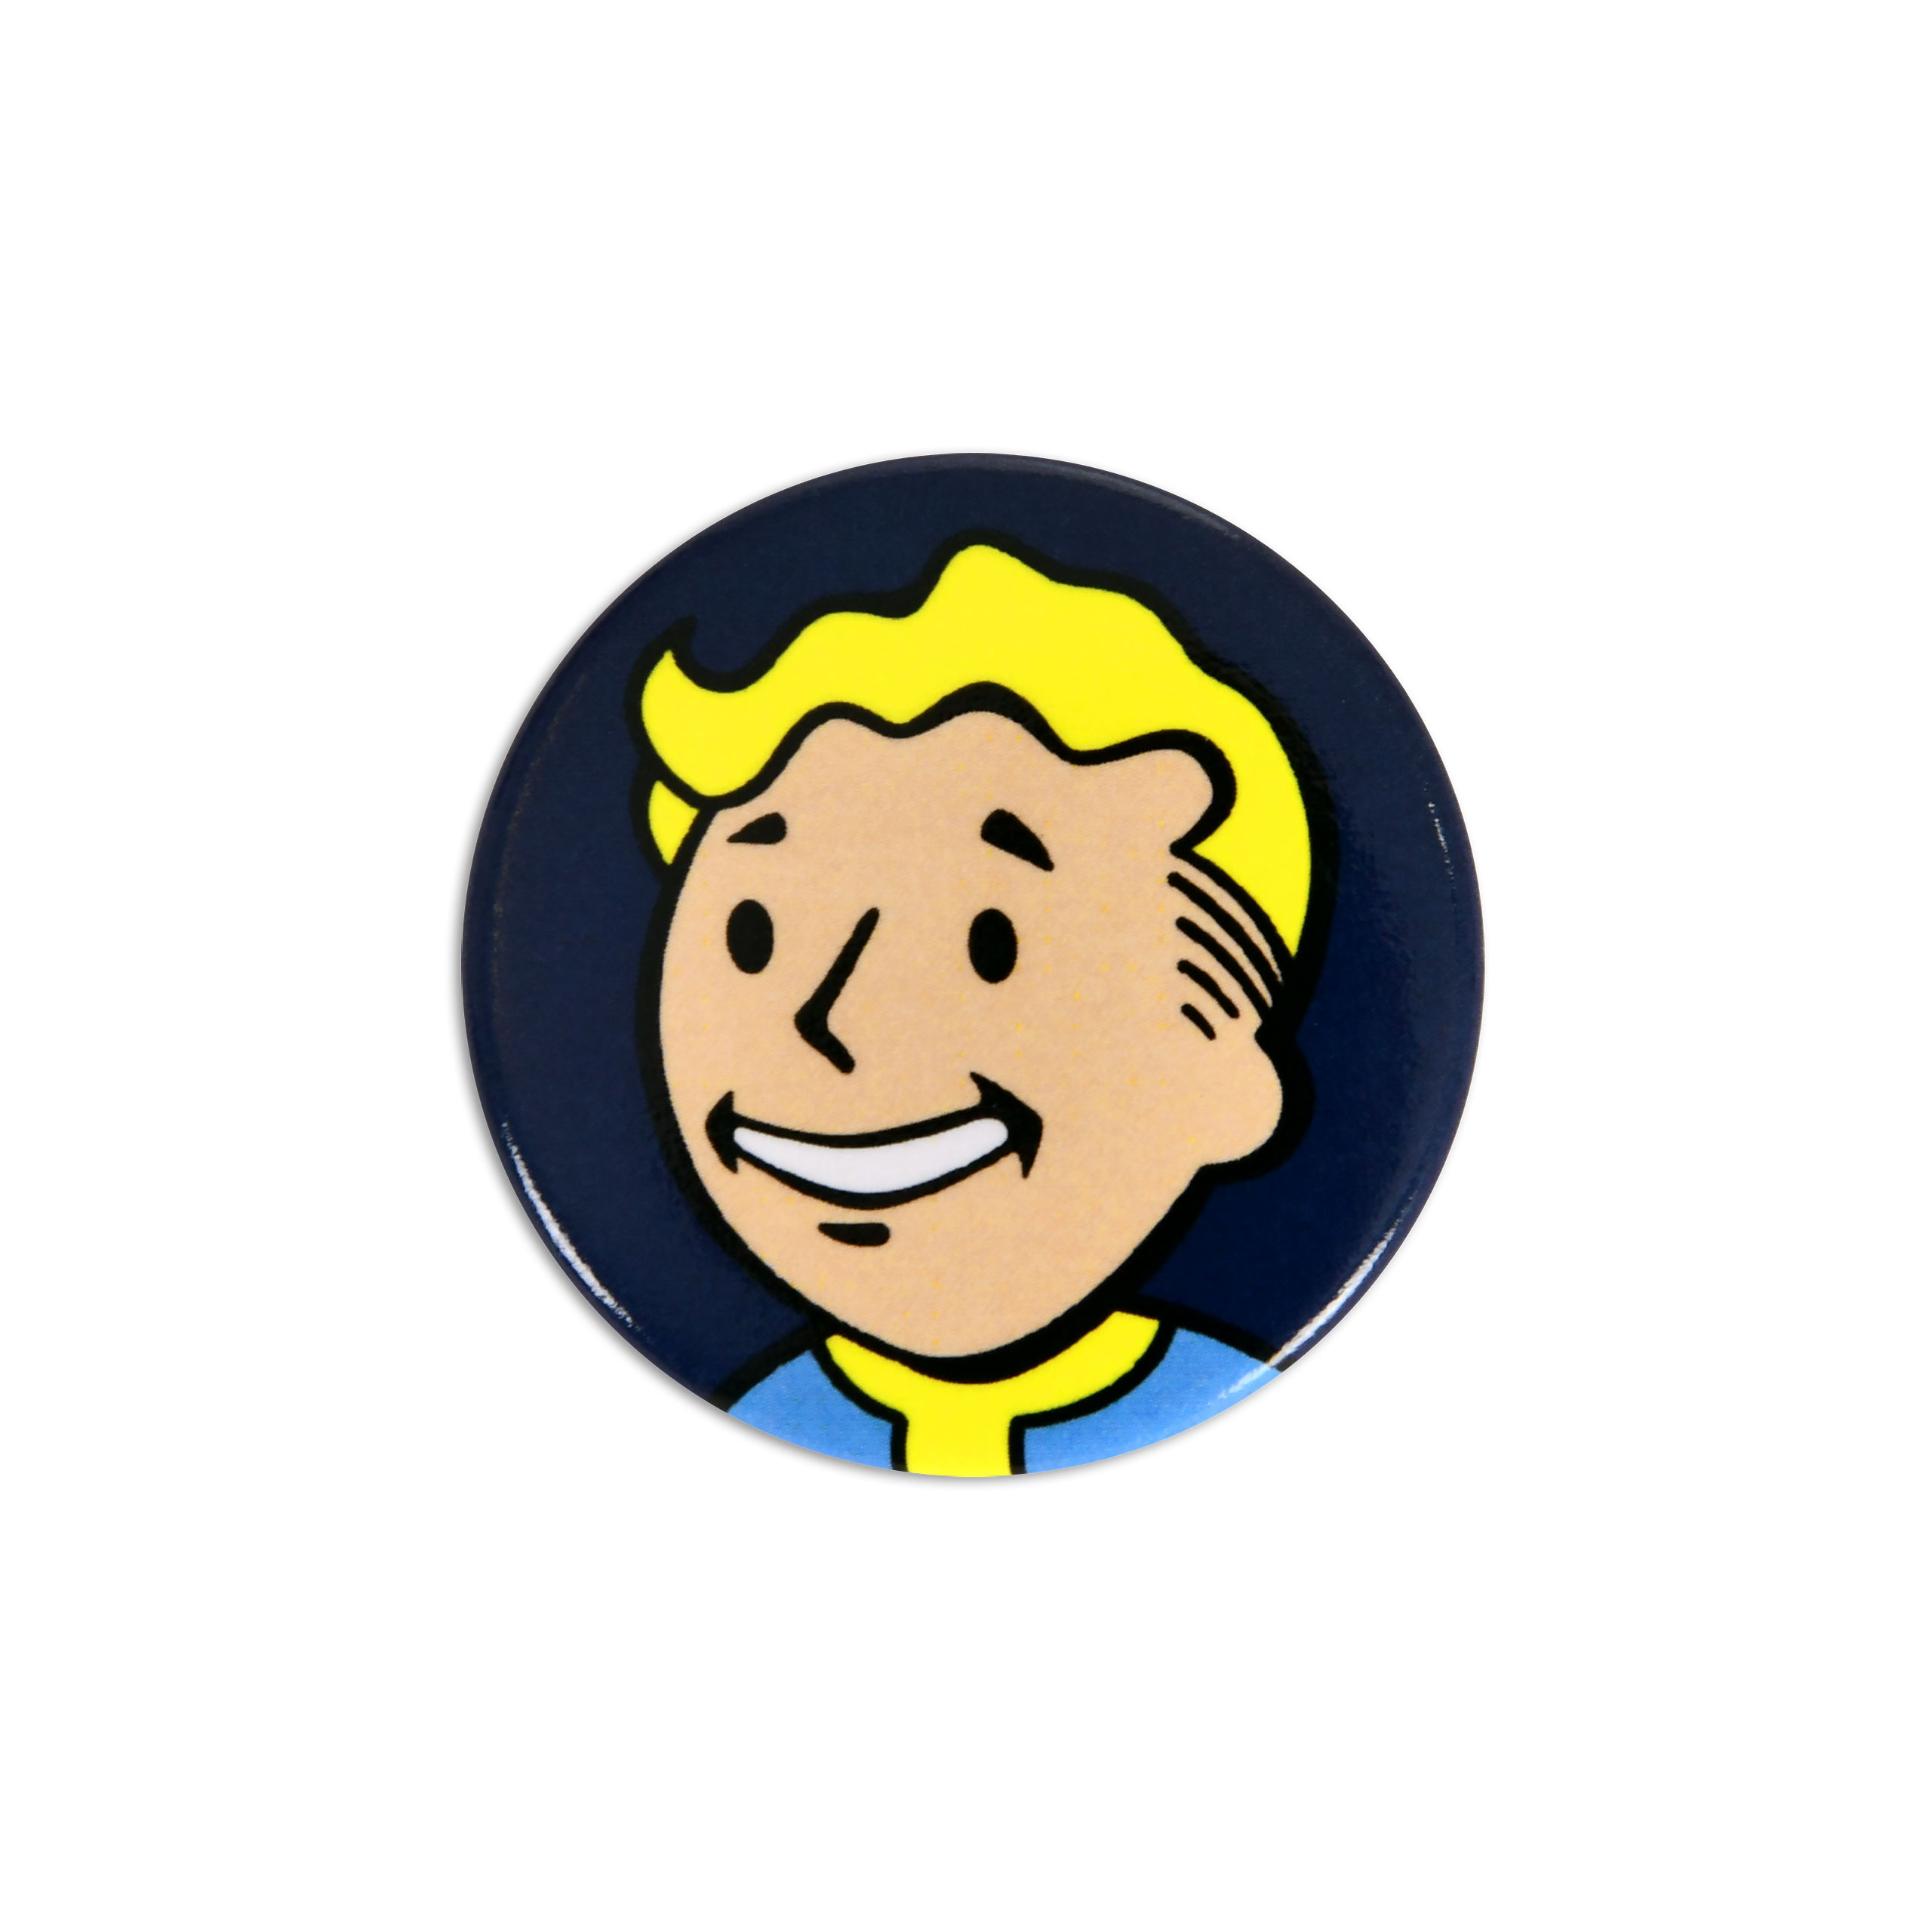 Vault Boy Button für Fallout Fans